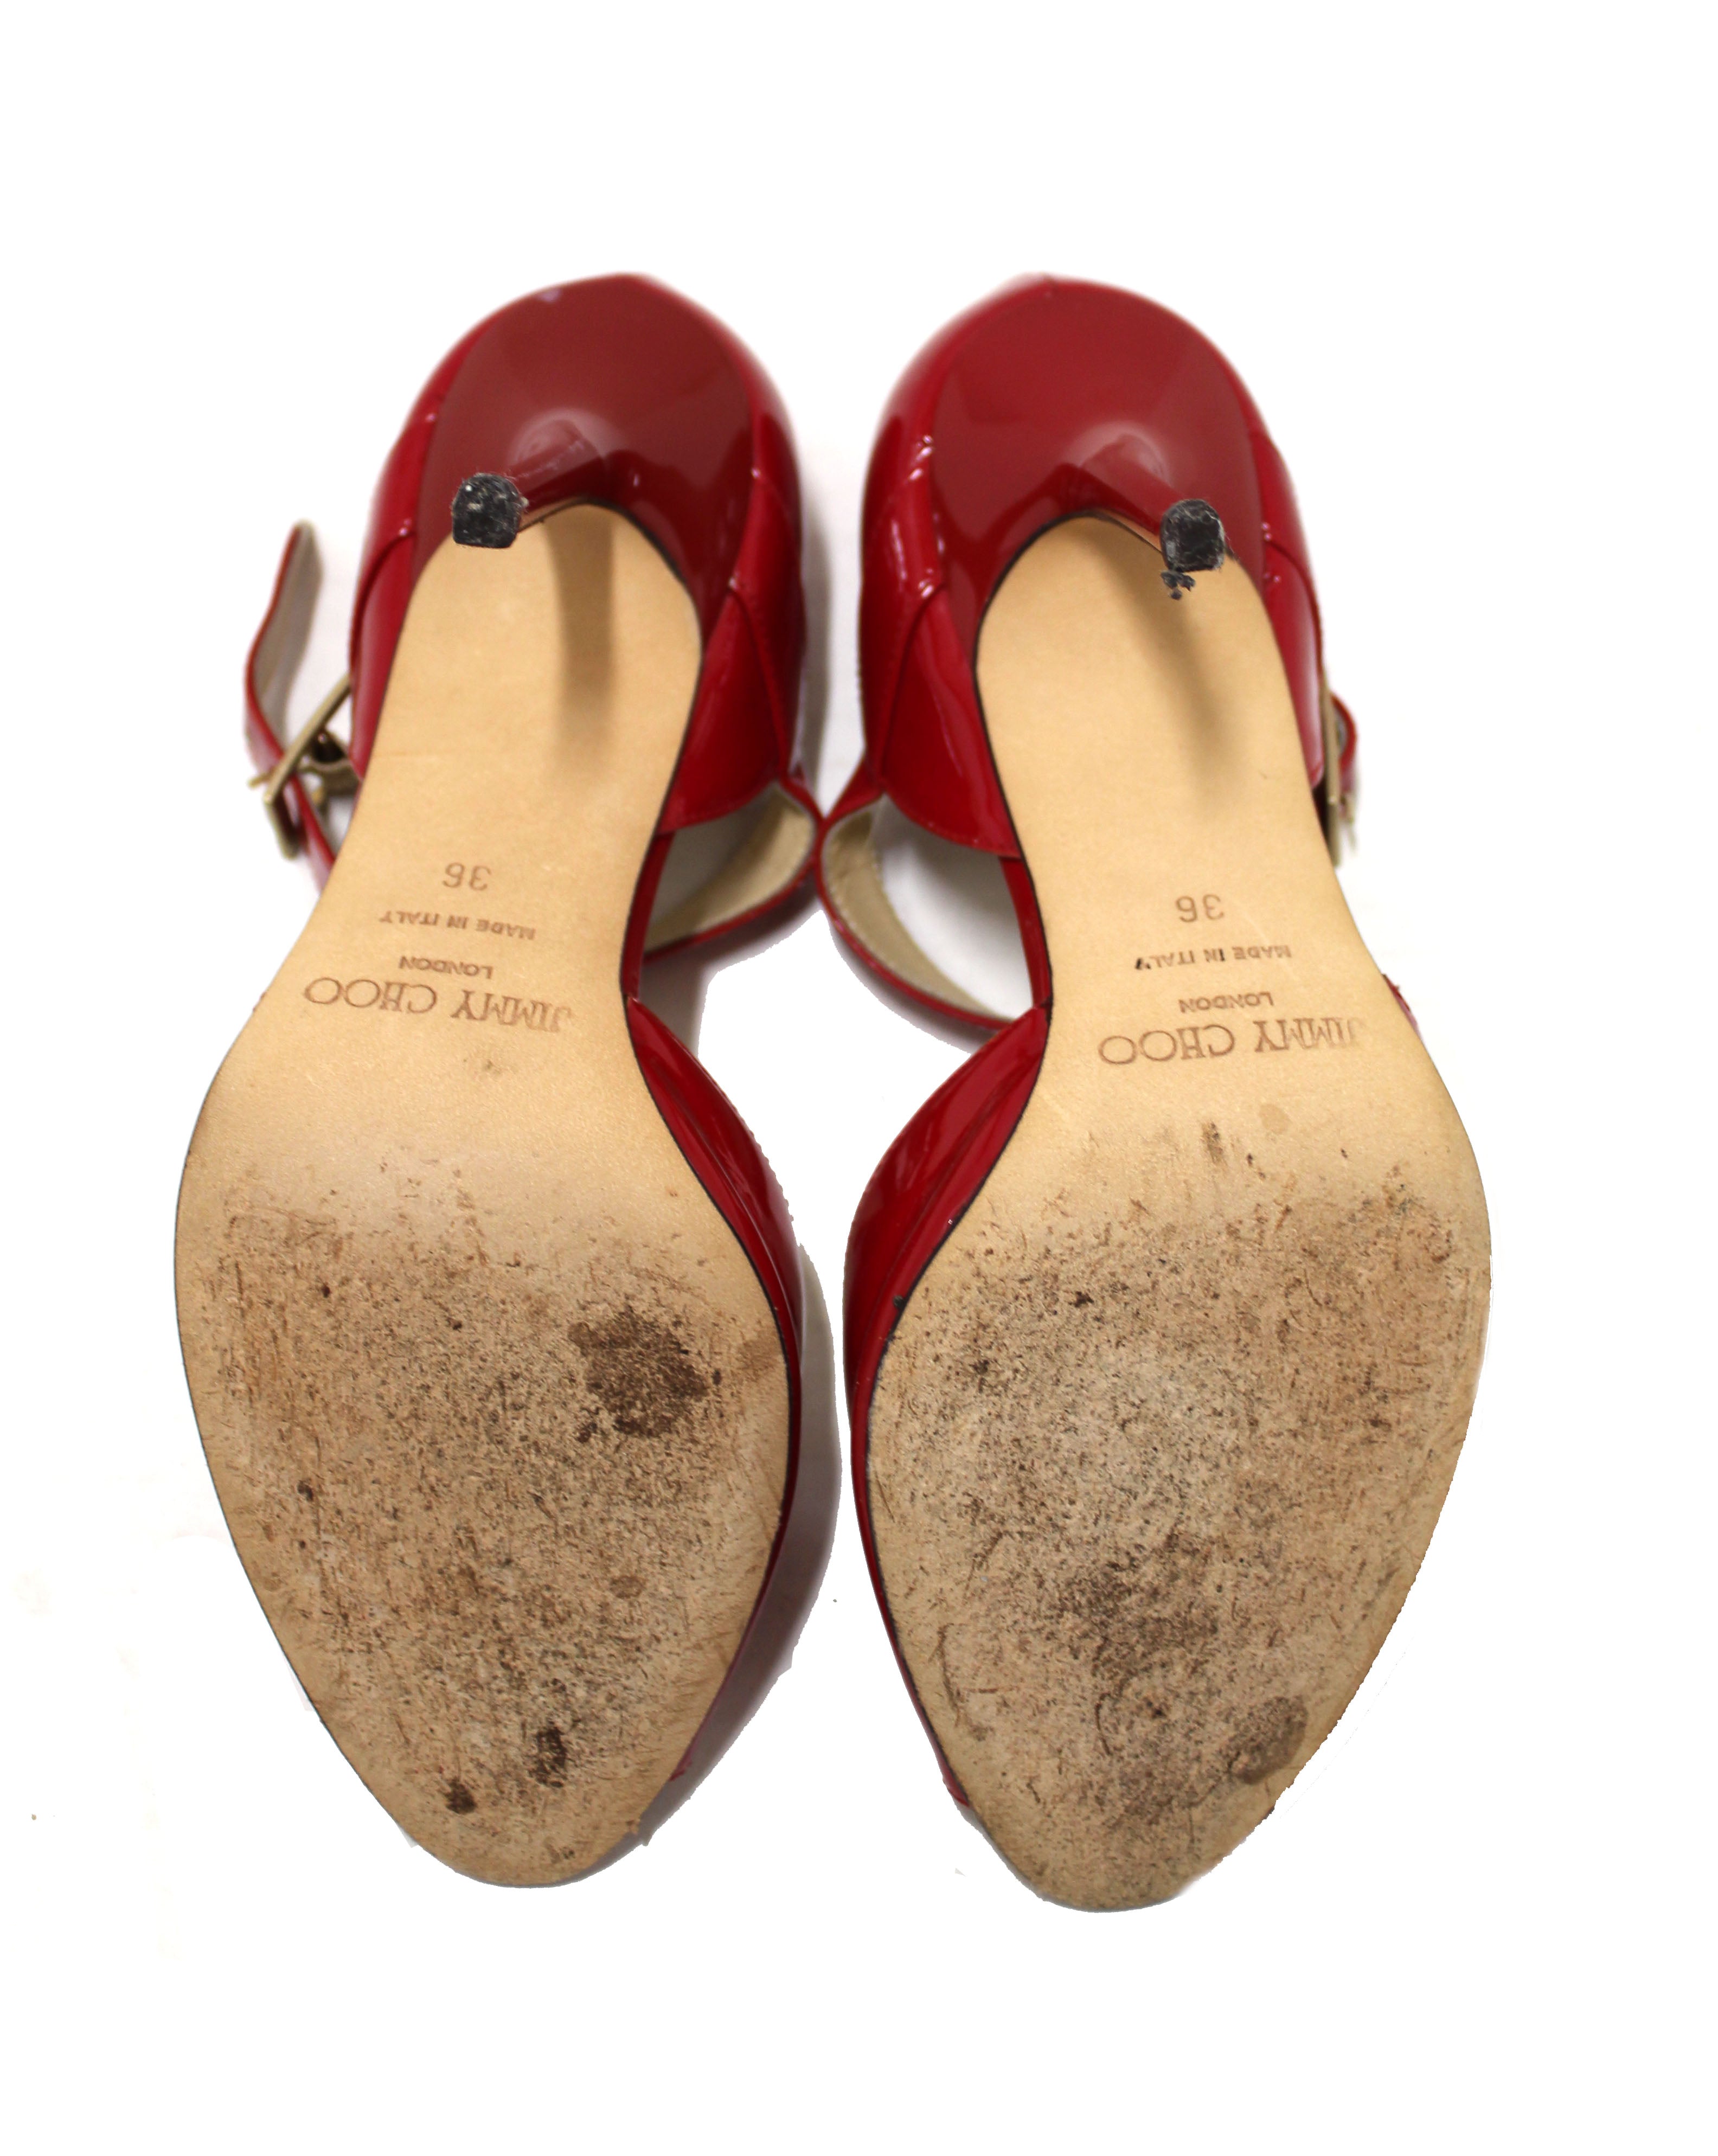 Authentic Jimmy Choo Red Patent Heel Sandal Size 36 – Paris